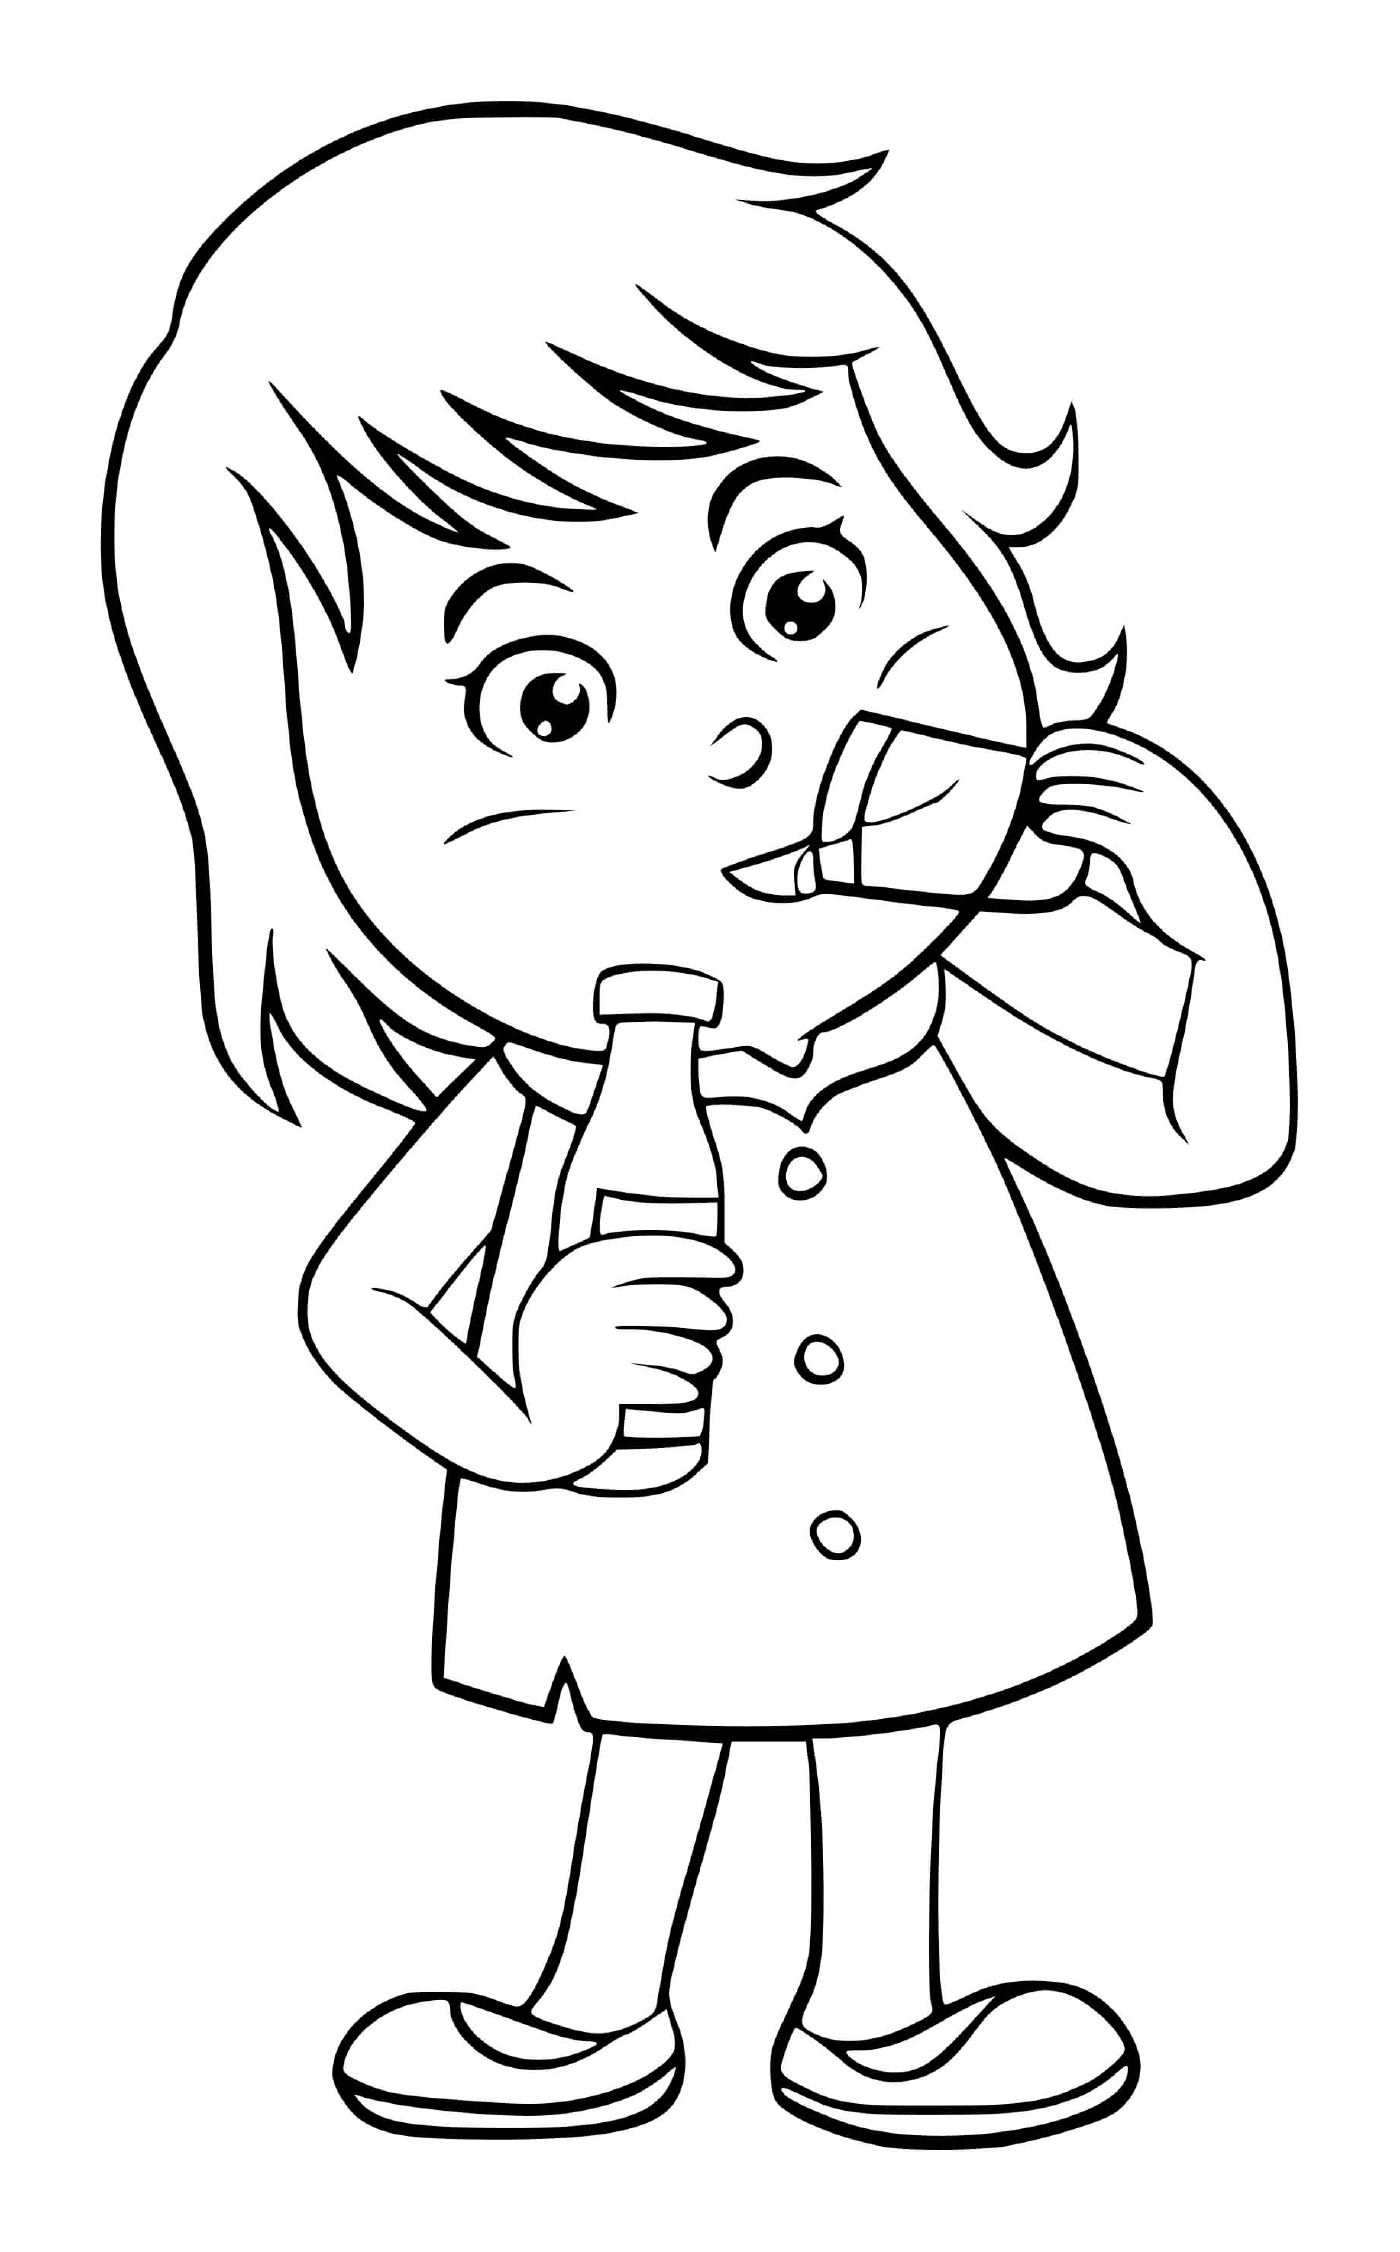  Un bambino beve acqua con sete 